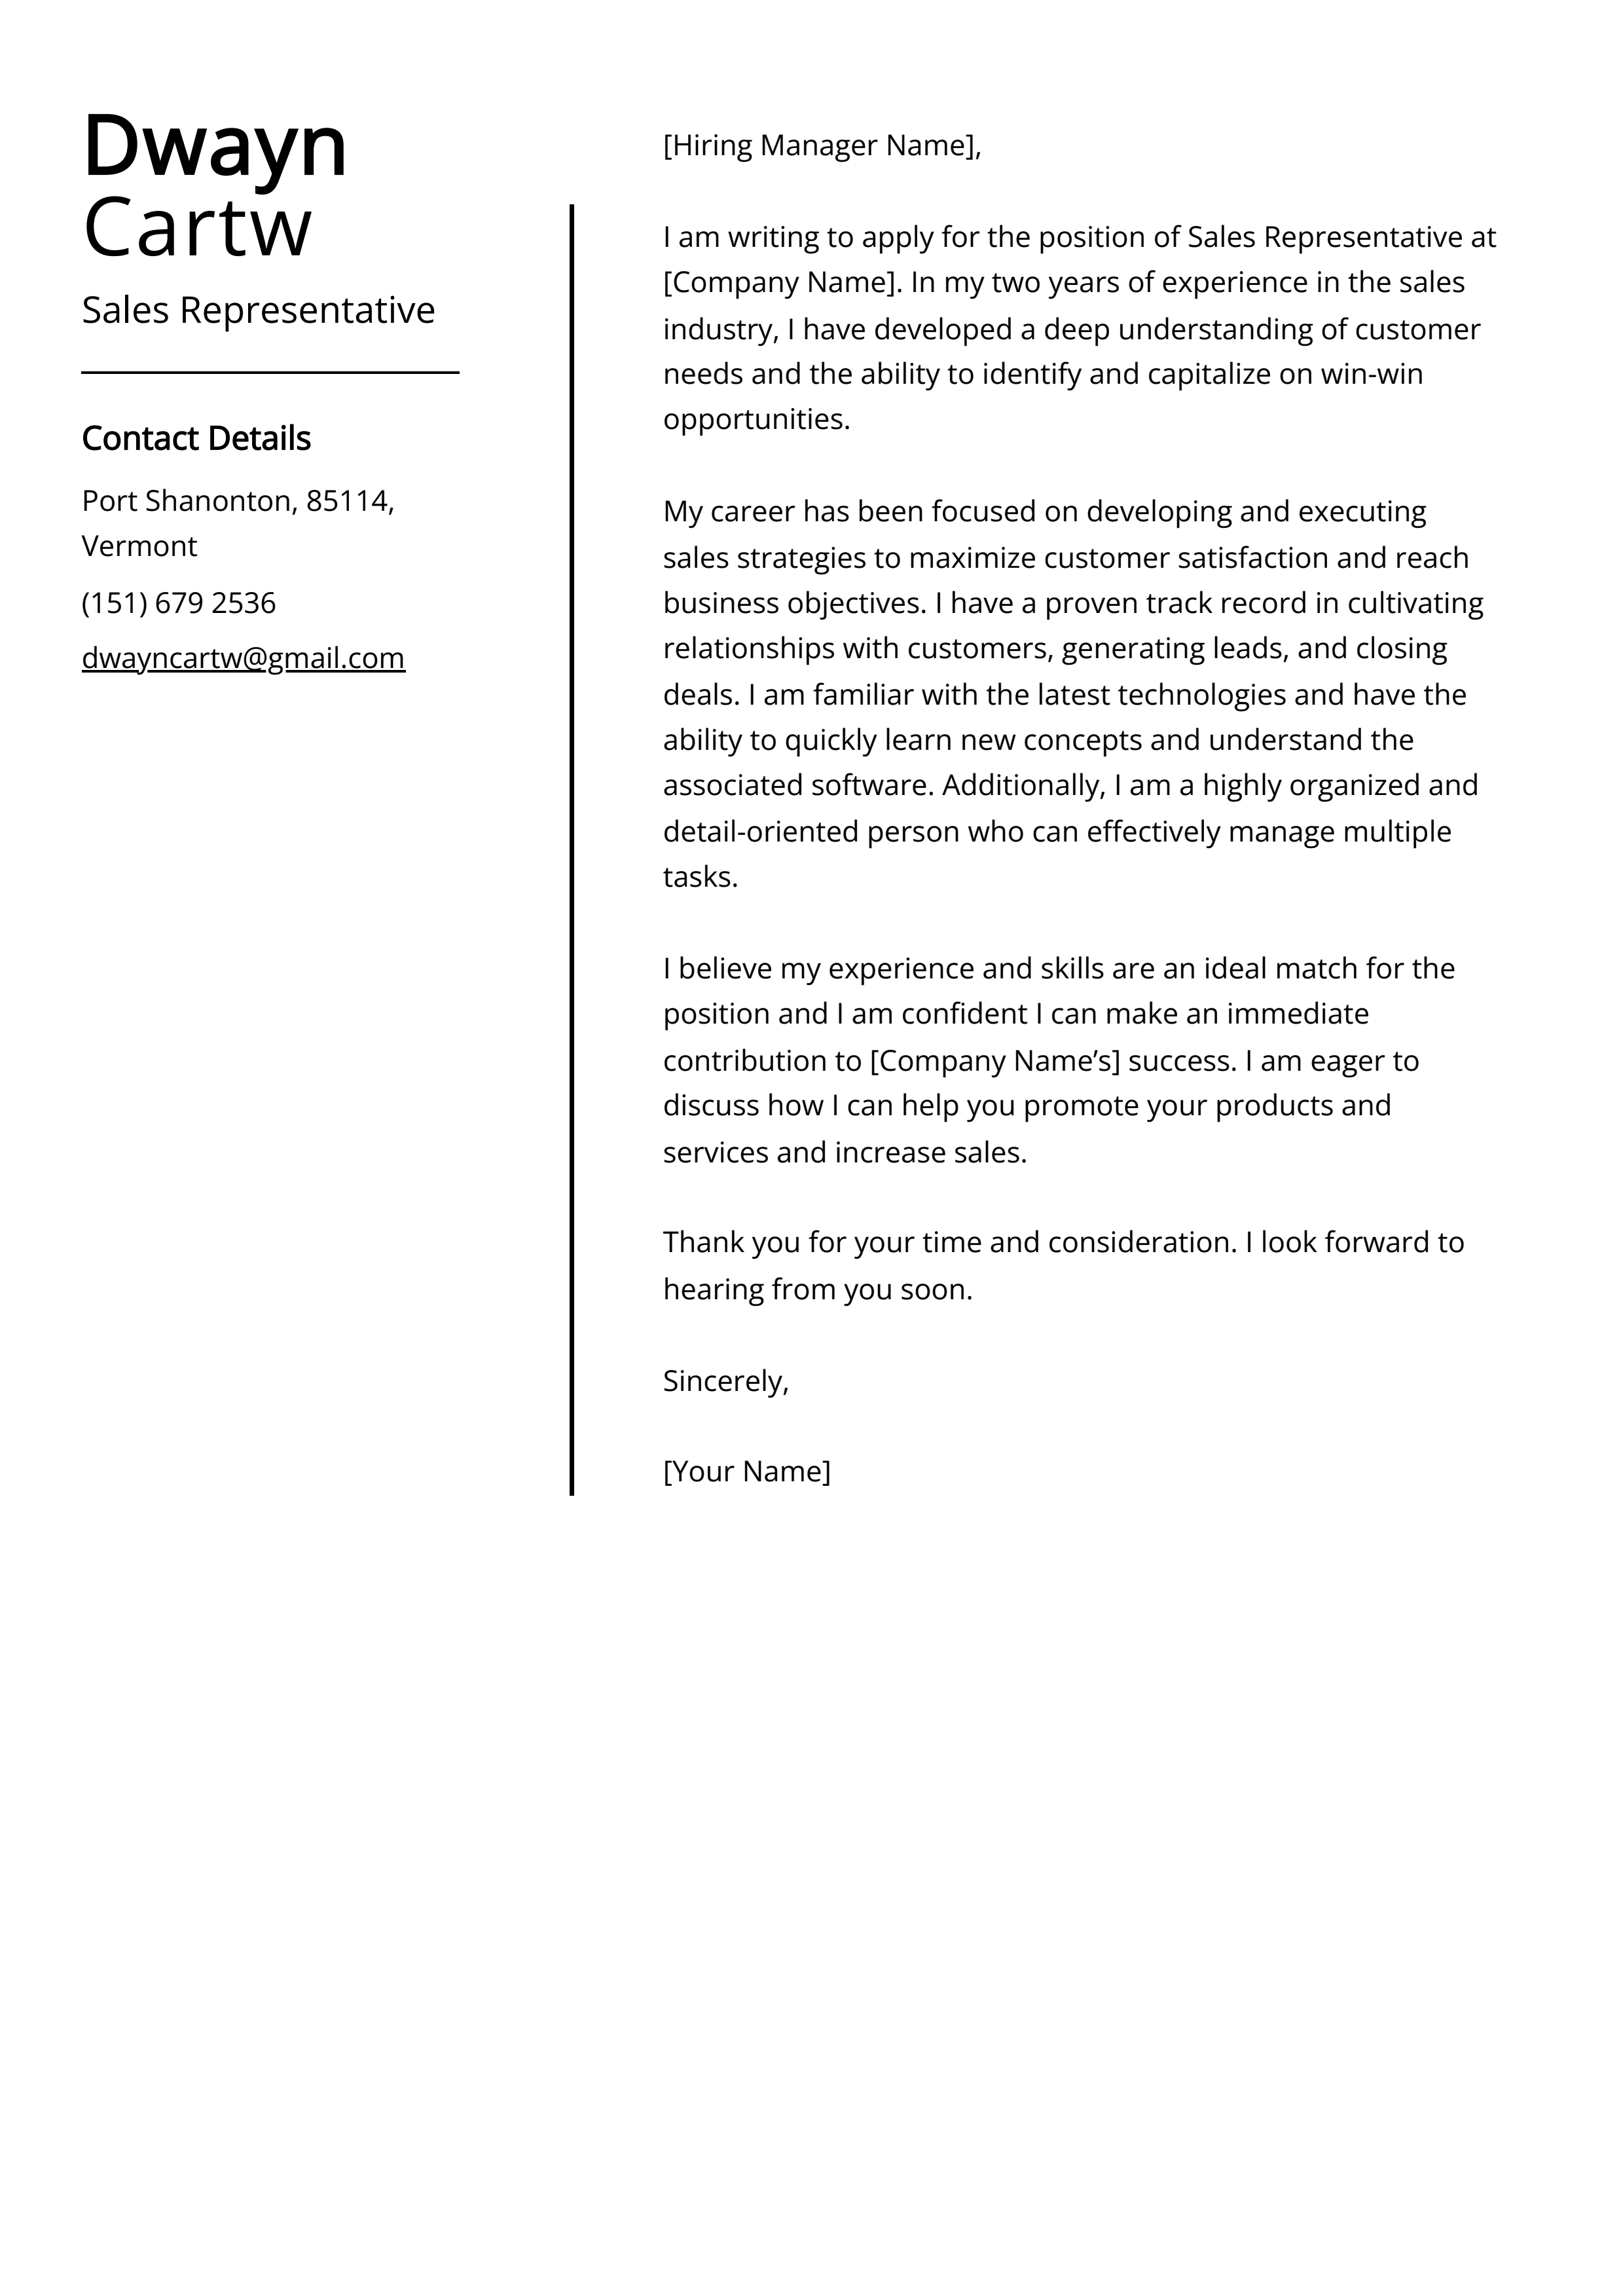 Sales Representative Cover Letter Example